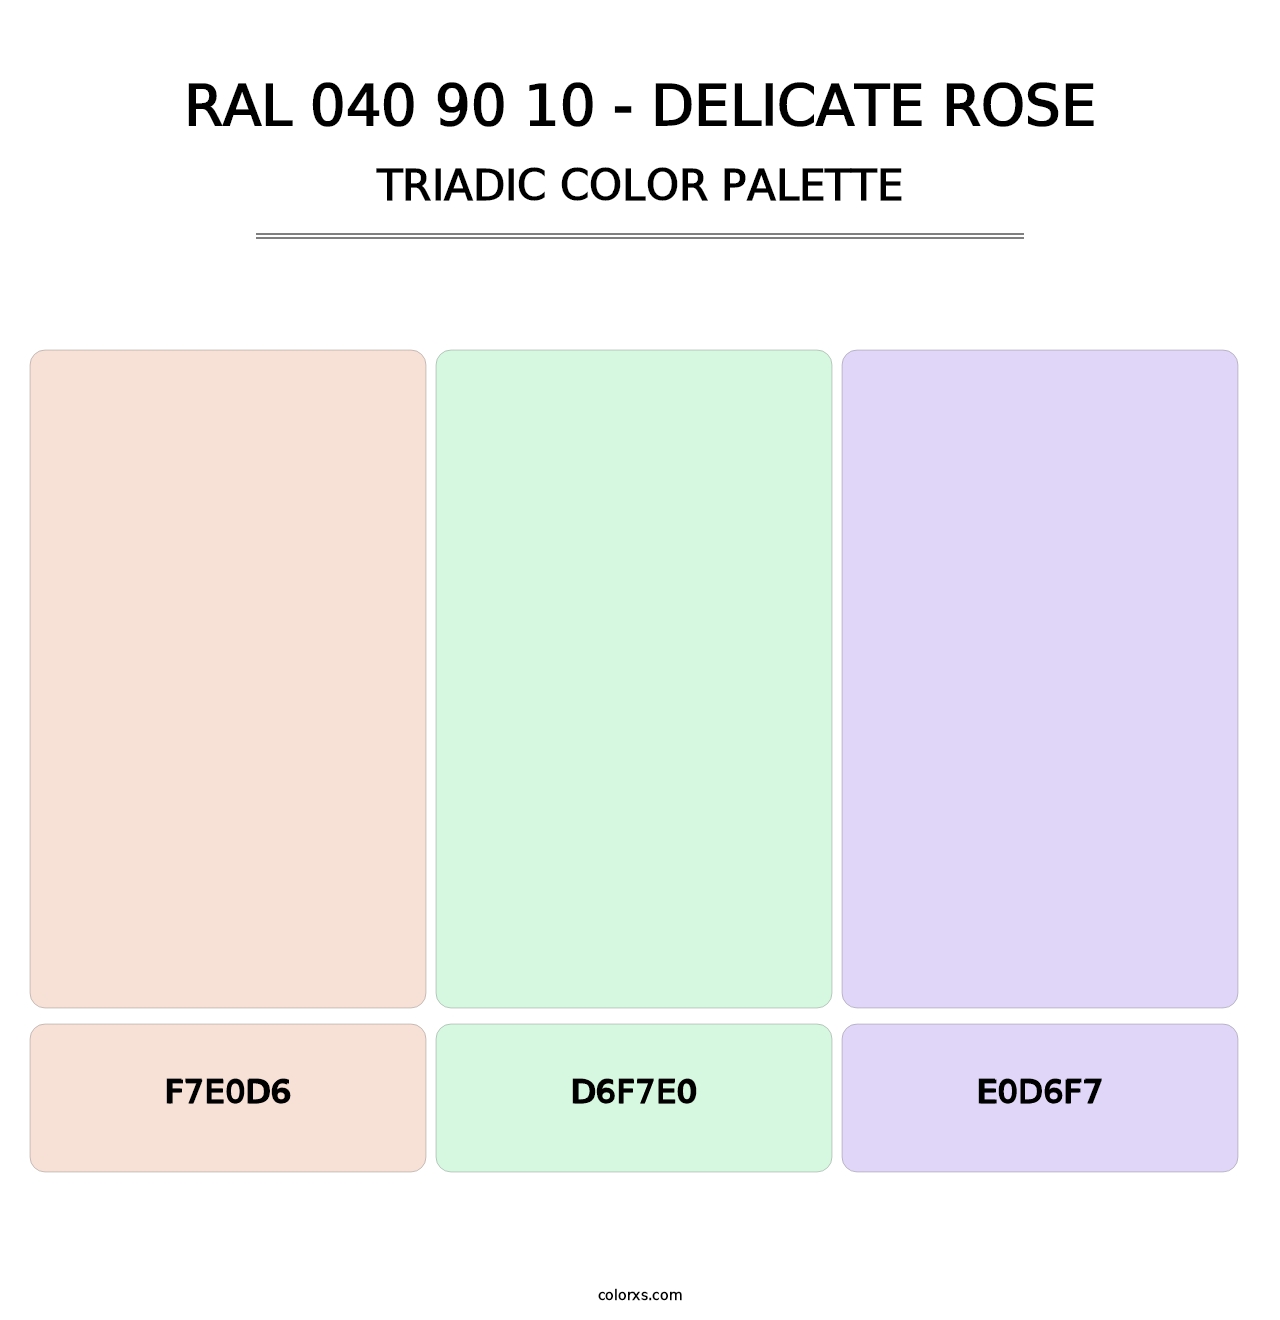 RAL 040 90 10 - Delicate Rose - Triadic Color Palette